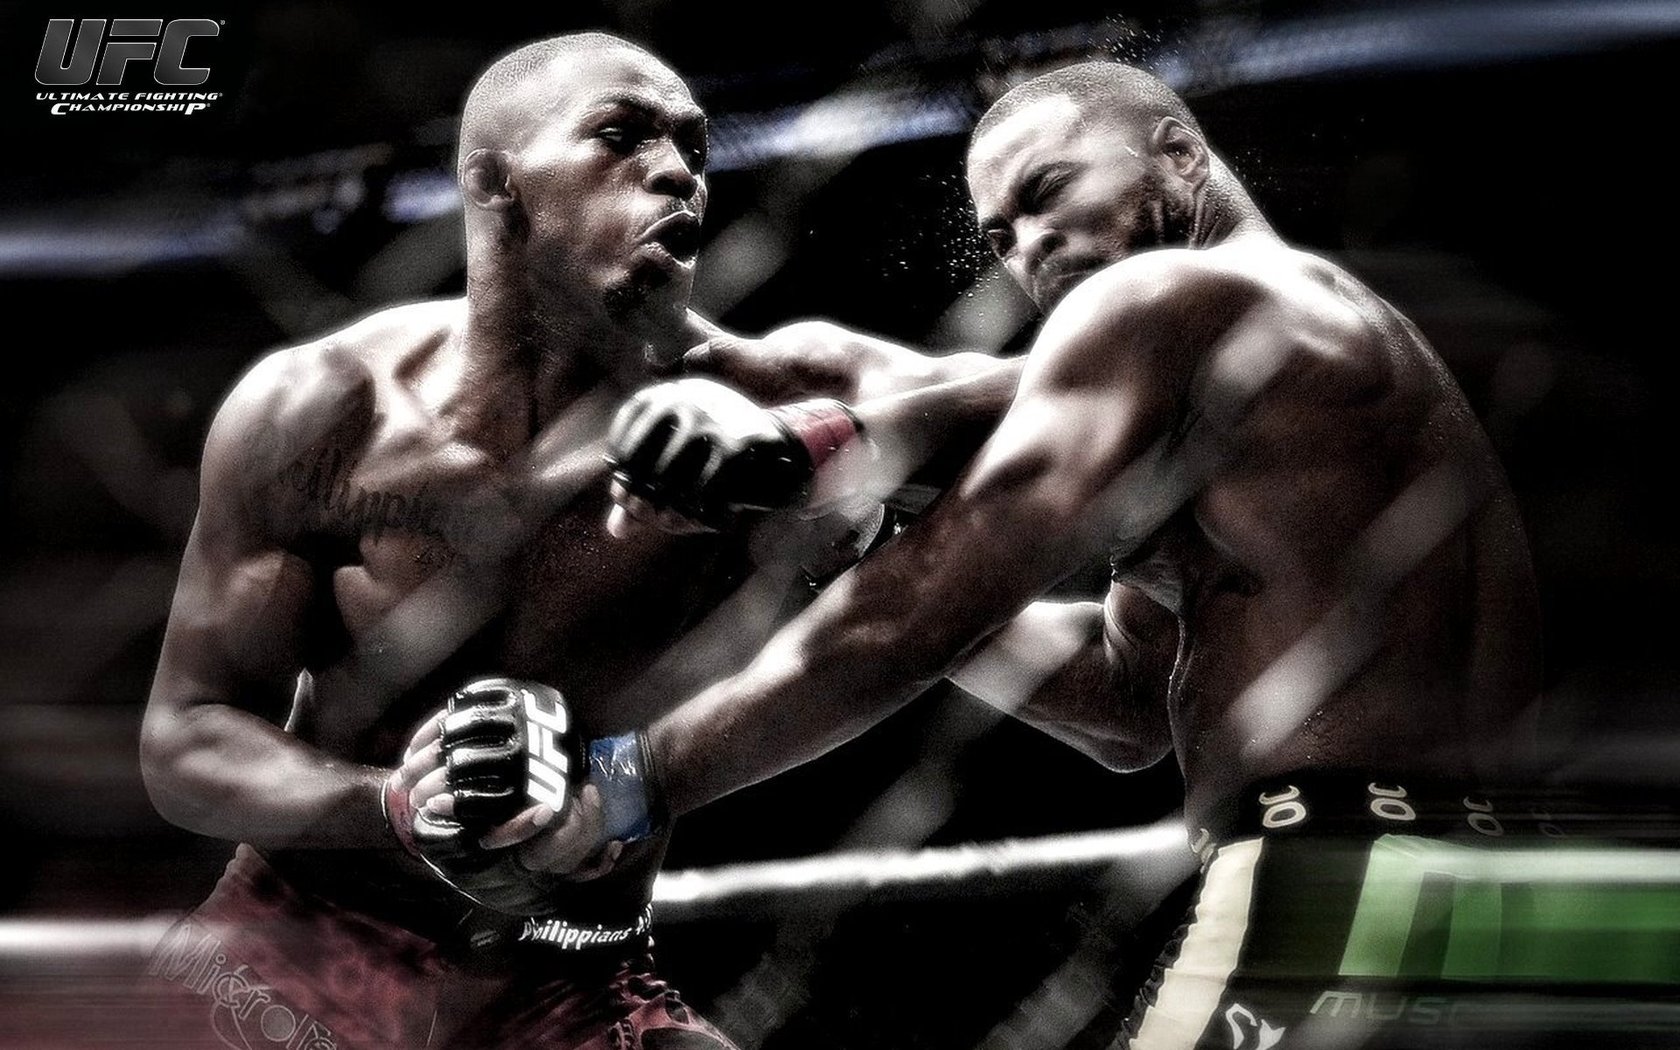 41+] UFC Wallpaper Fight - WallpaperSafari